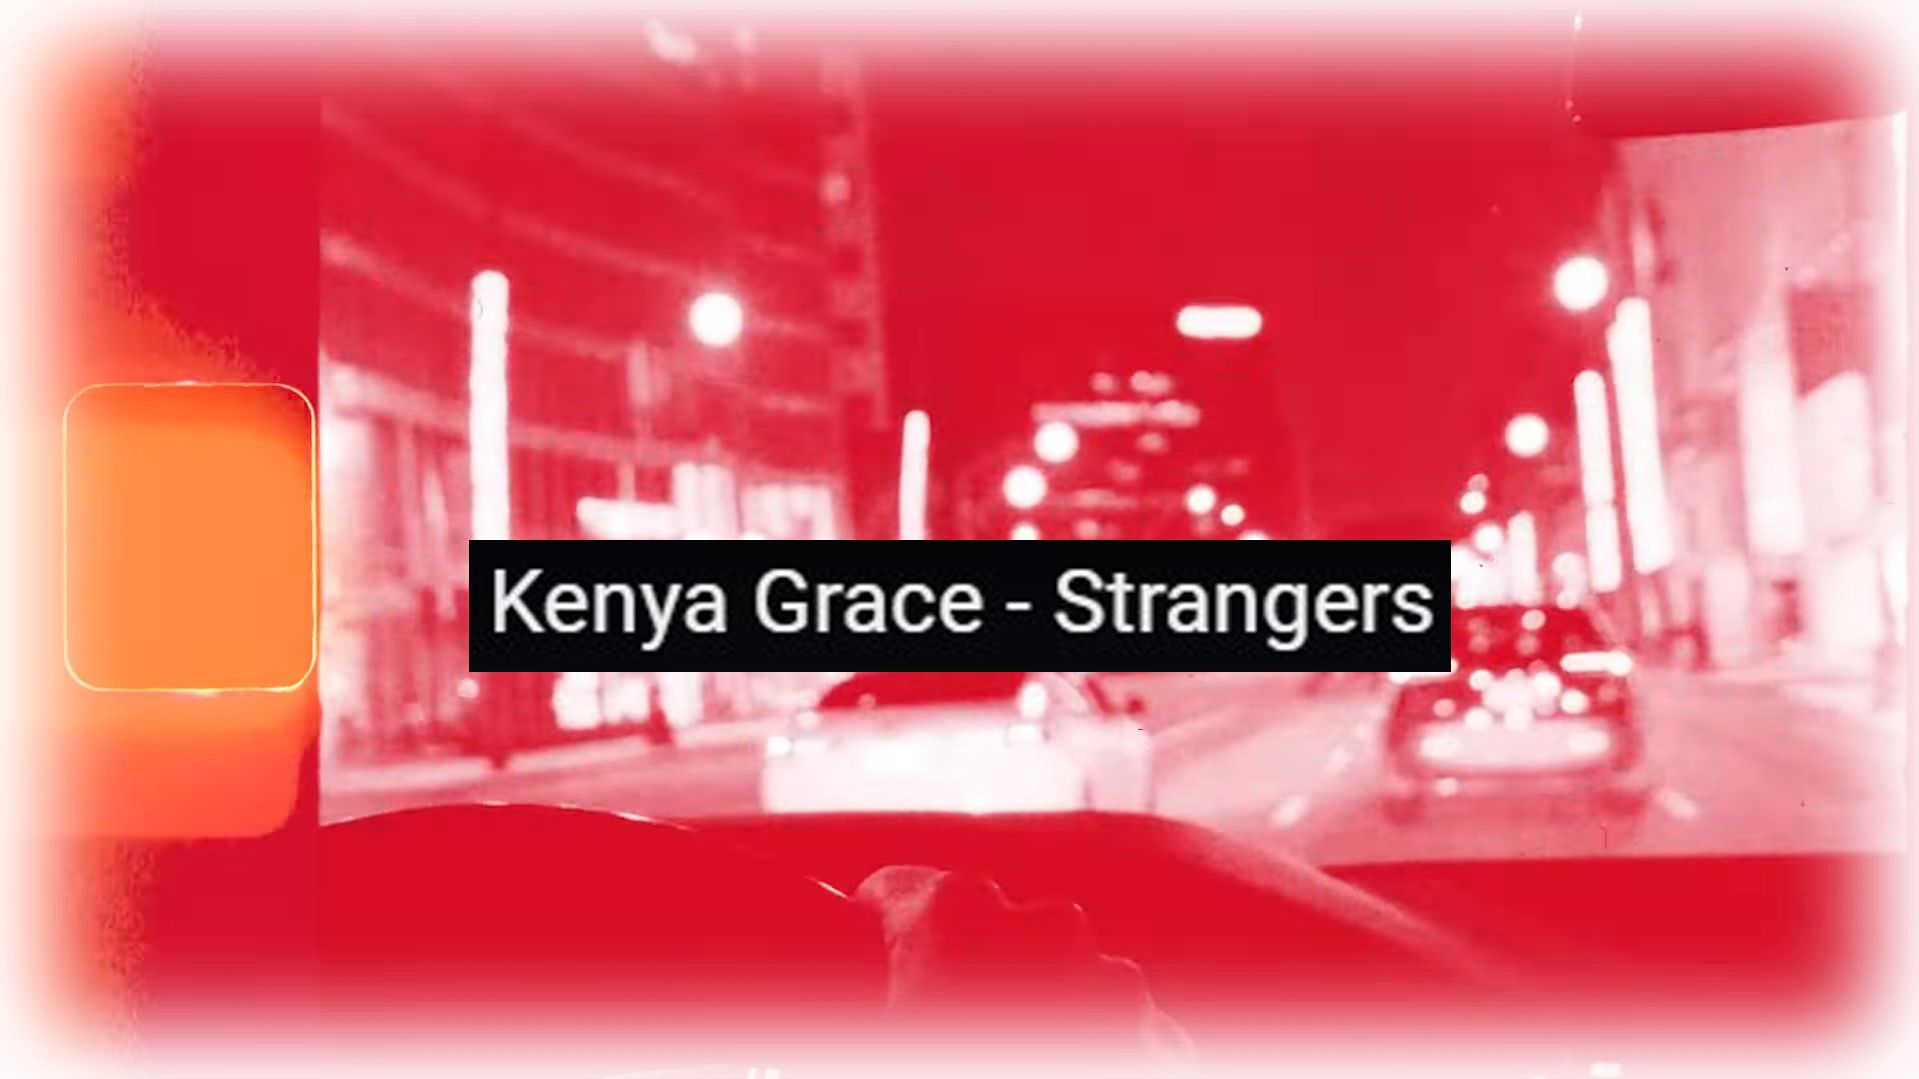 kenya-grace-strangers-perevod-teksta-na-russkij-yazyk